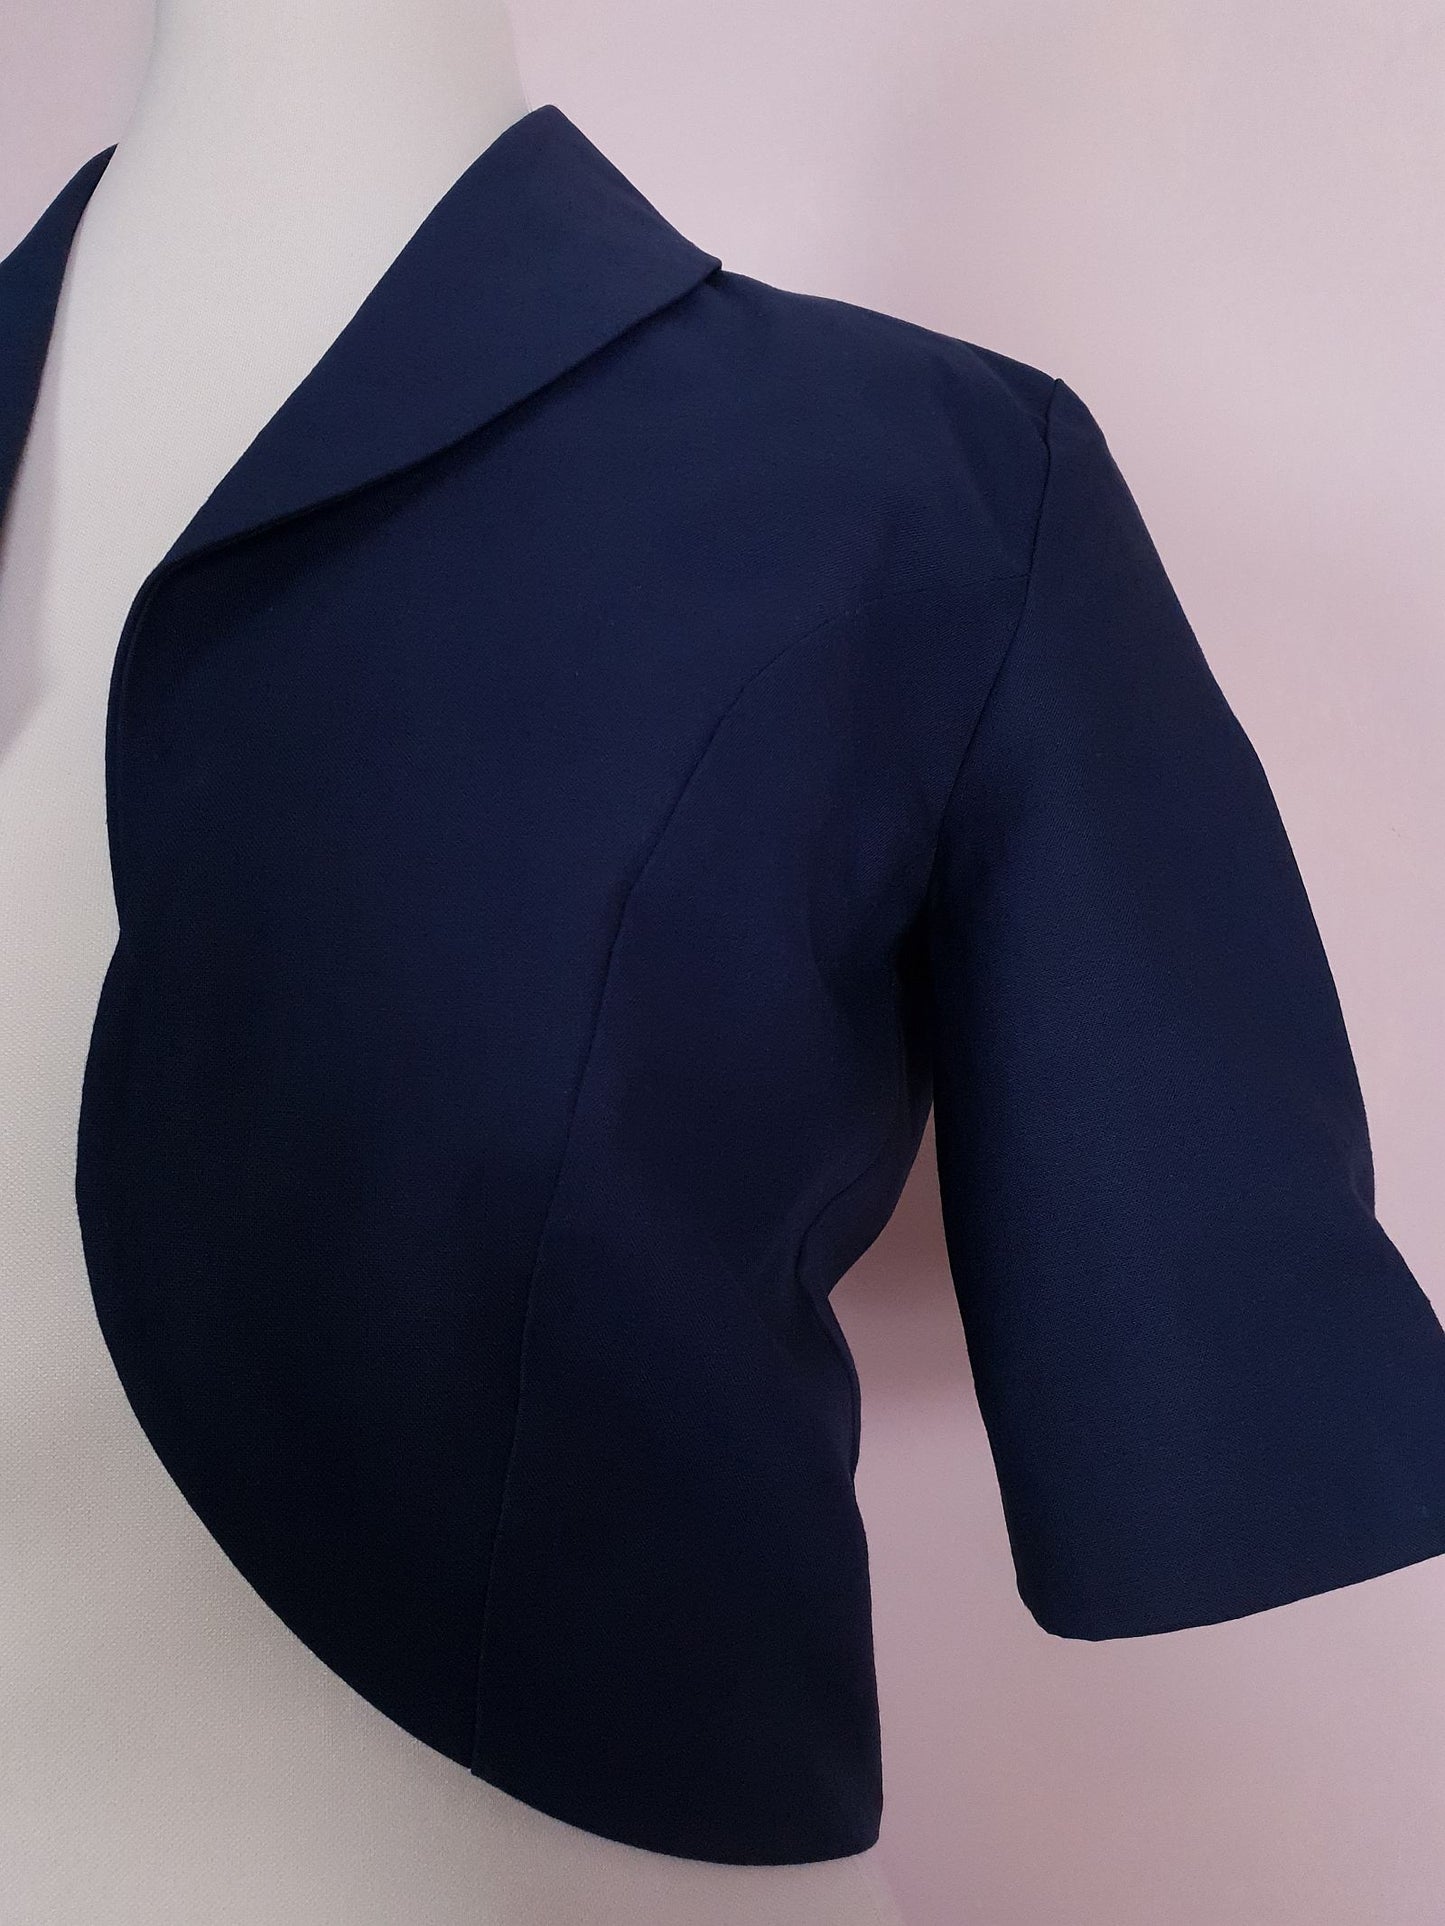 Vintage Laura Ashley Navy Blue Bolero Jacket 90s Size 10